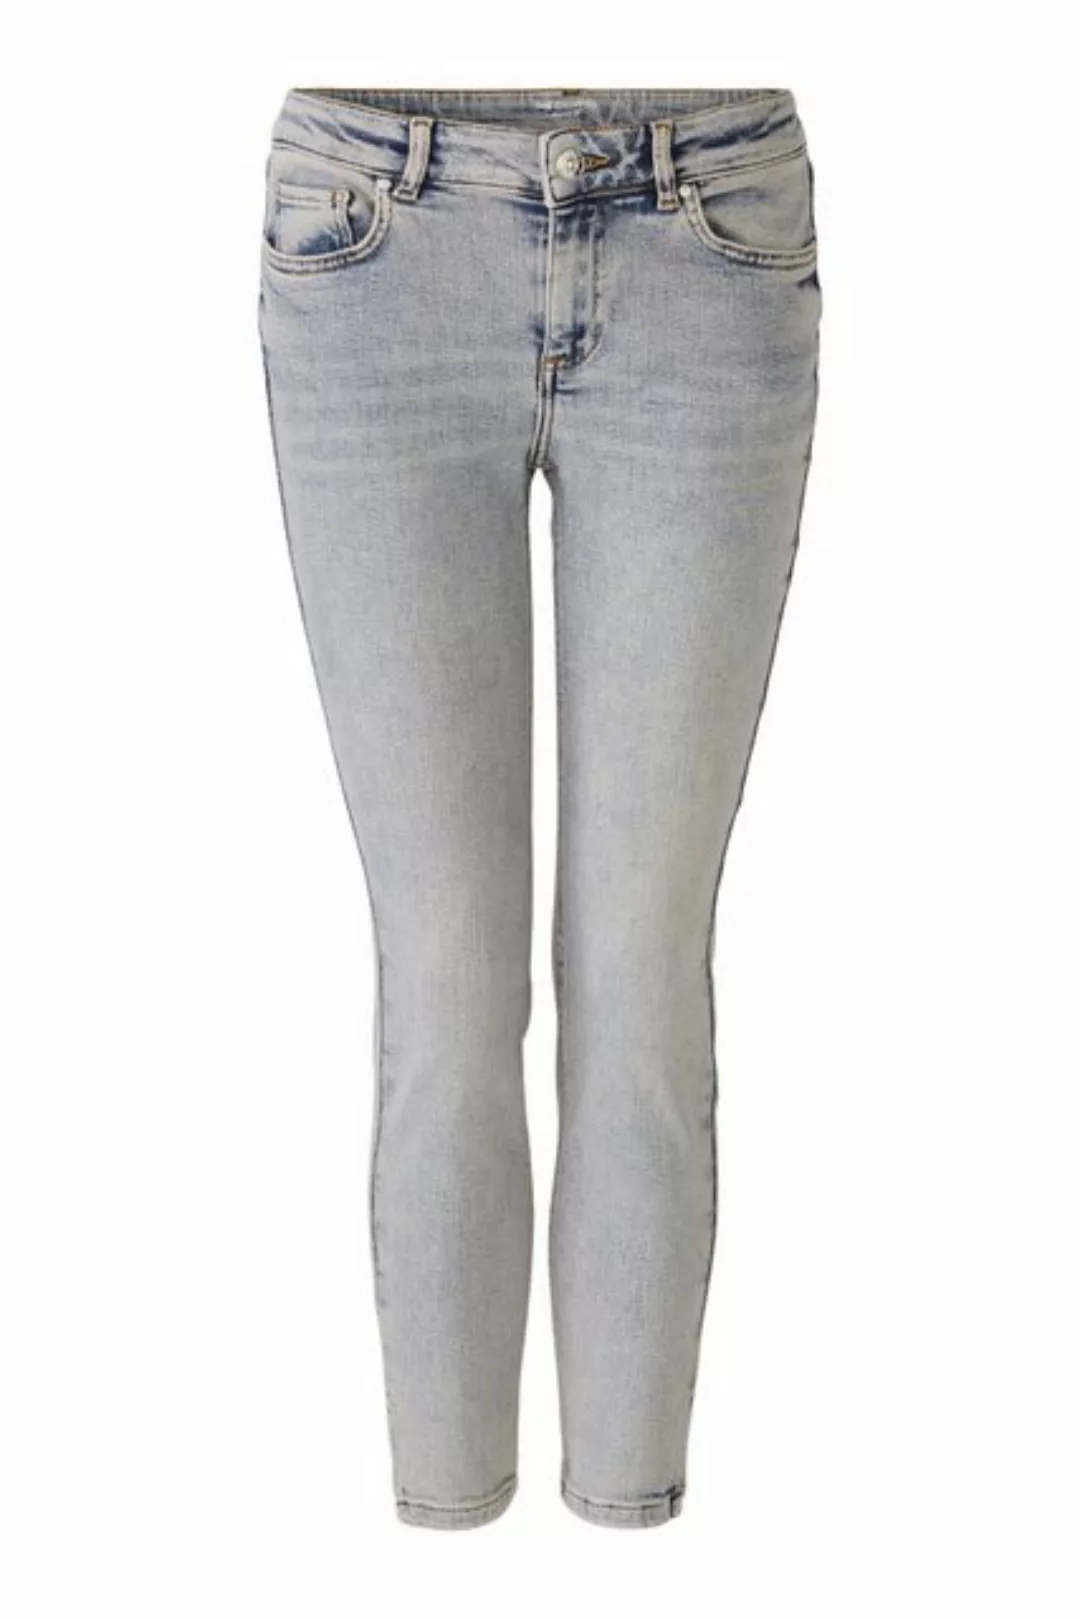 Oui Schlagjeans Jeans günstig online kaufen